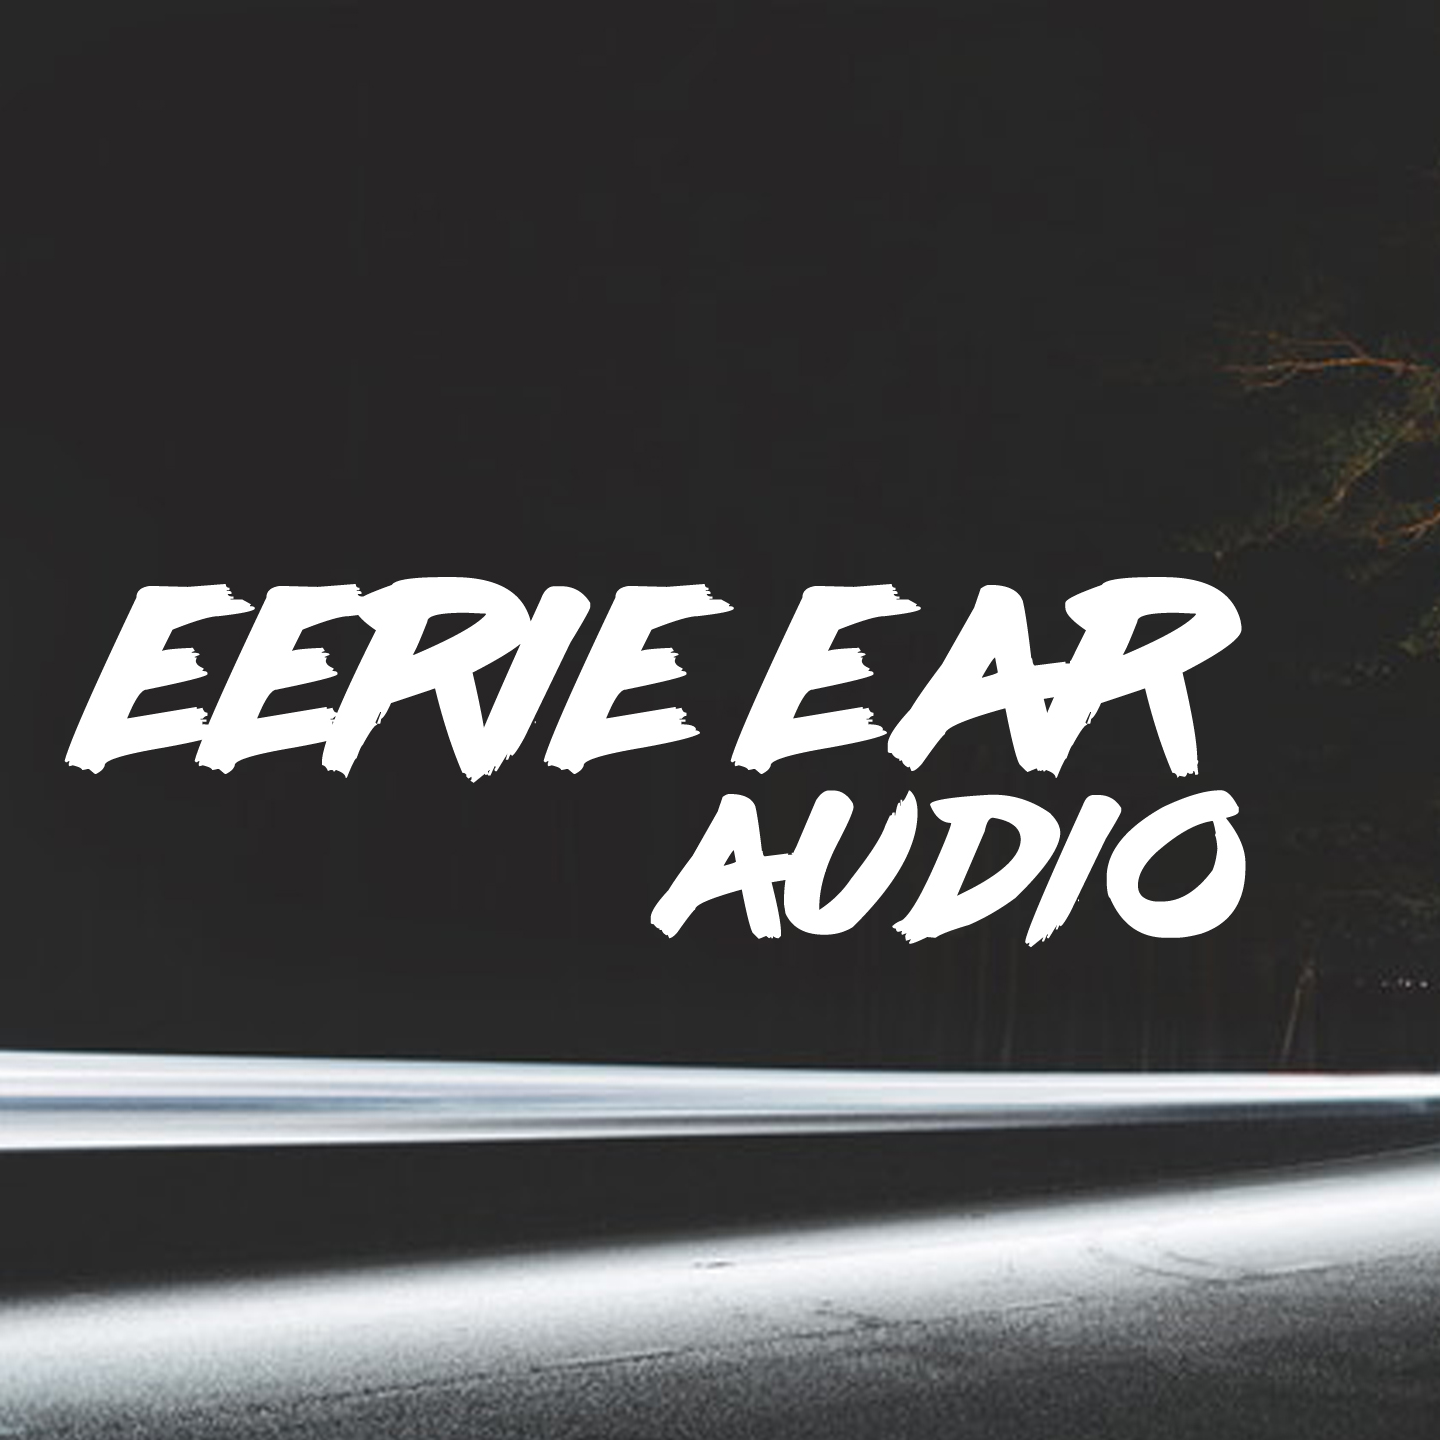 Eerie Ear Audio